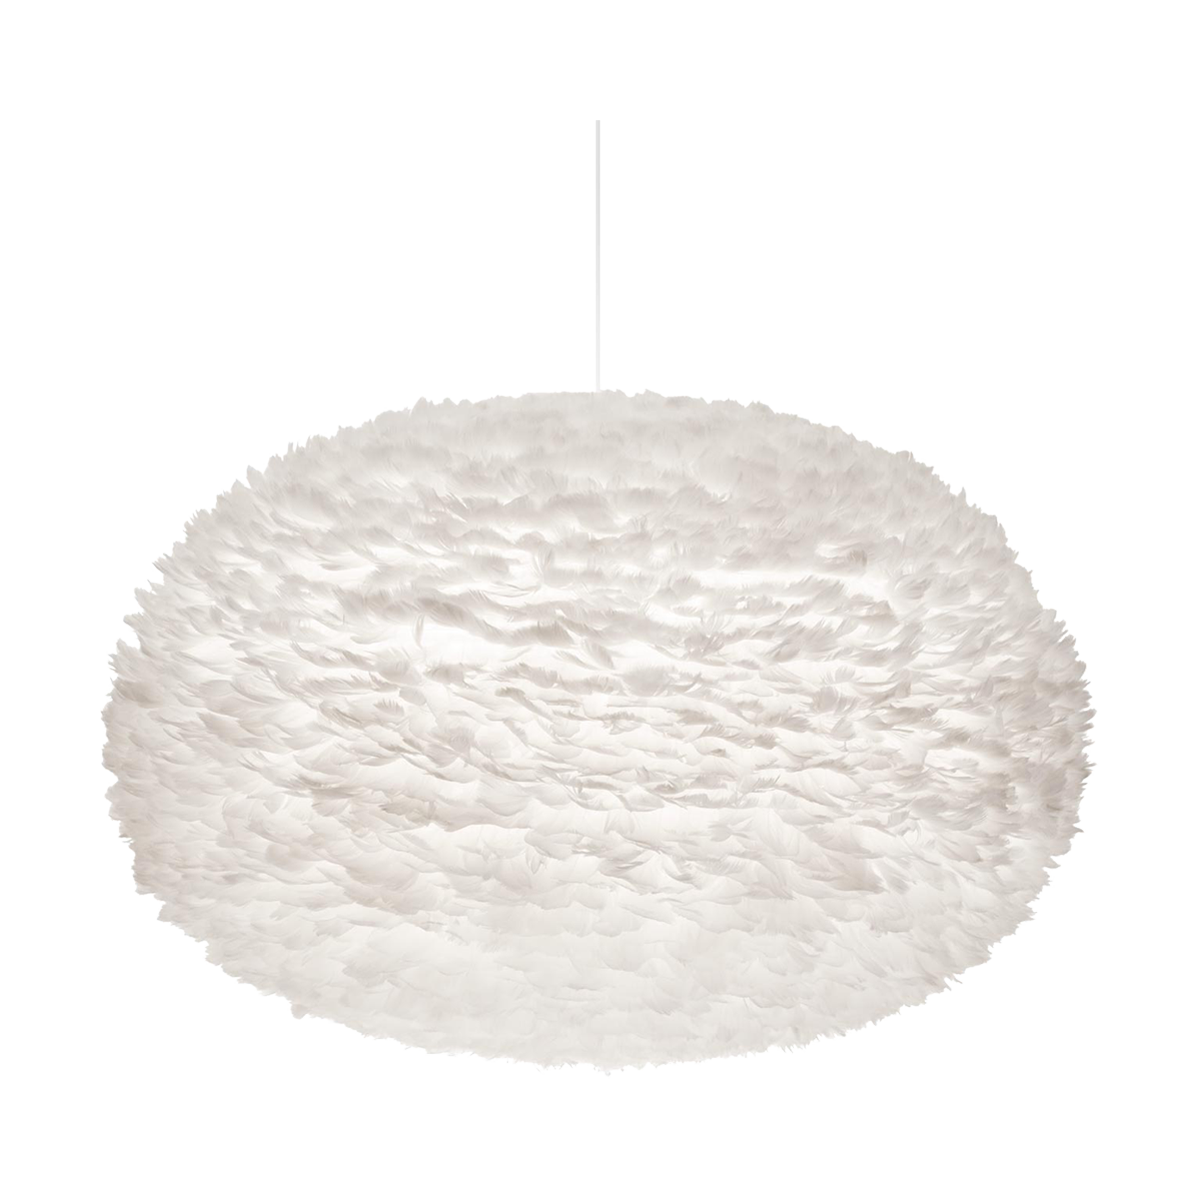 Eos XX-large hanglamp white - met koordset wit - Ø 110 cm